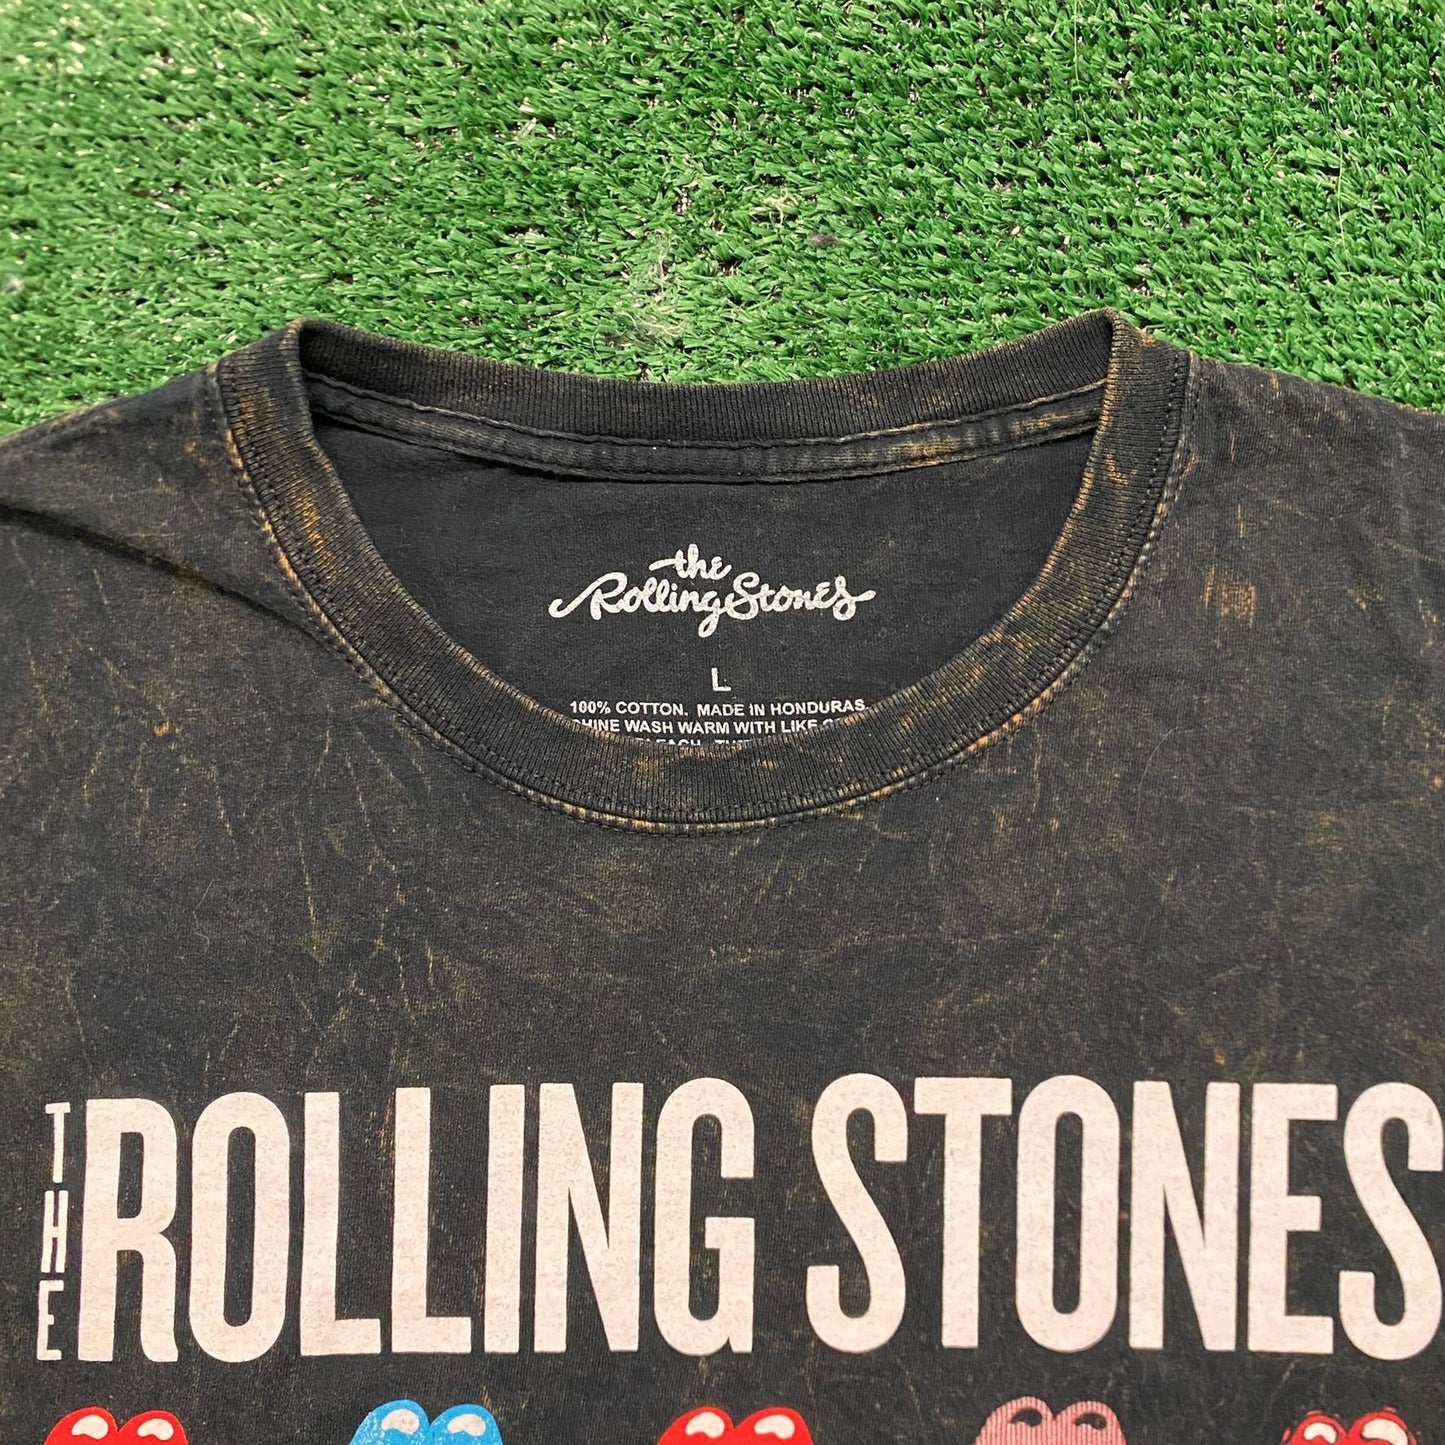 Rolling Stones Multi Tongue Lips Vintage Rock Band T-Shirt